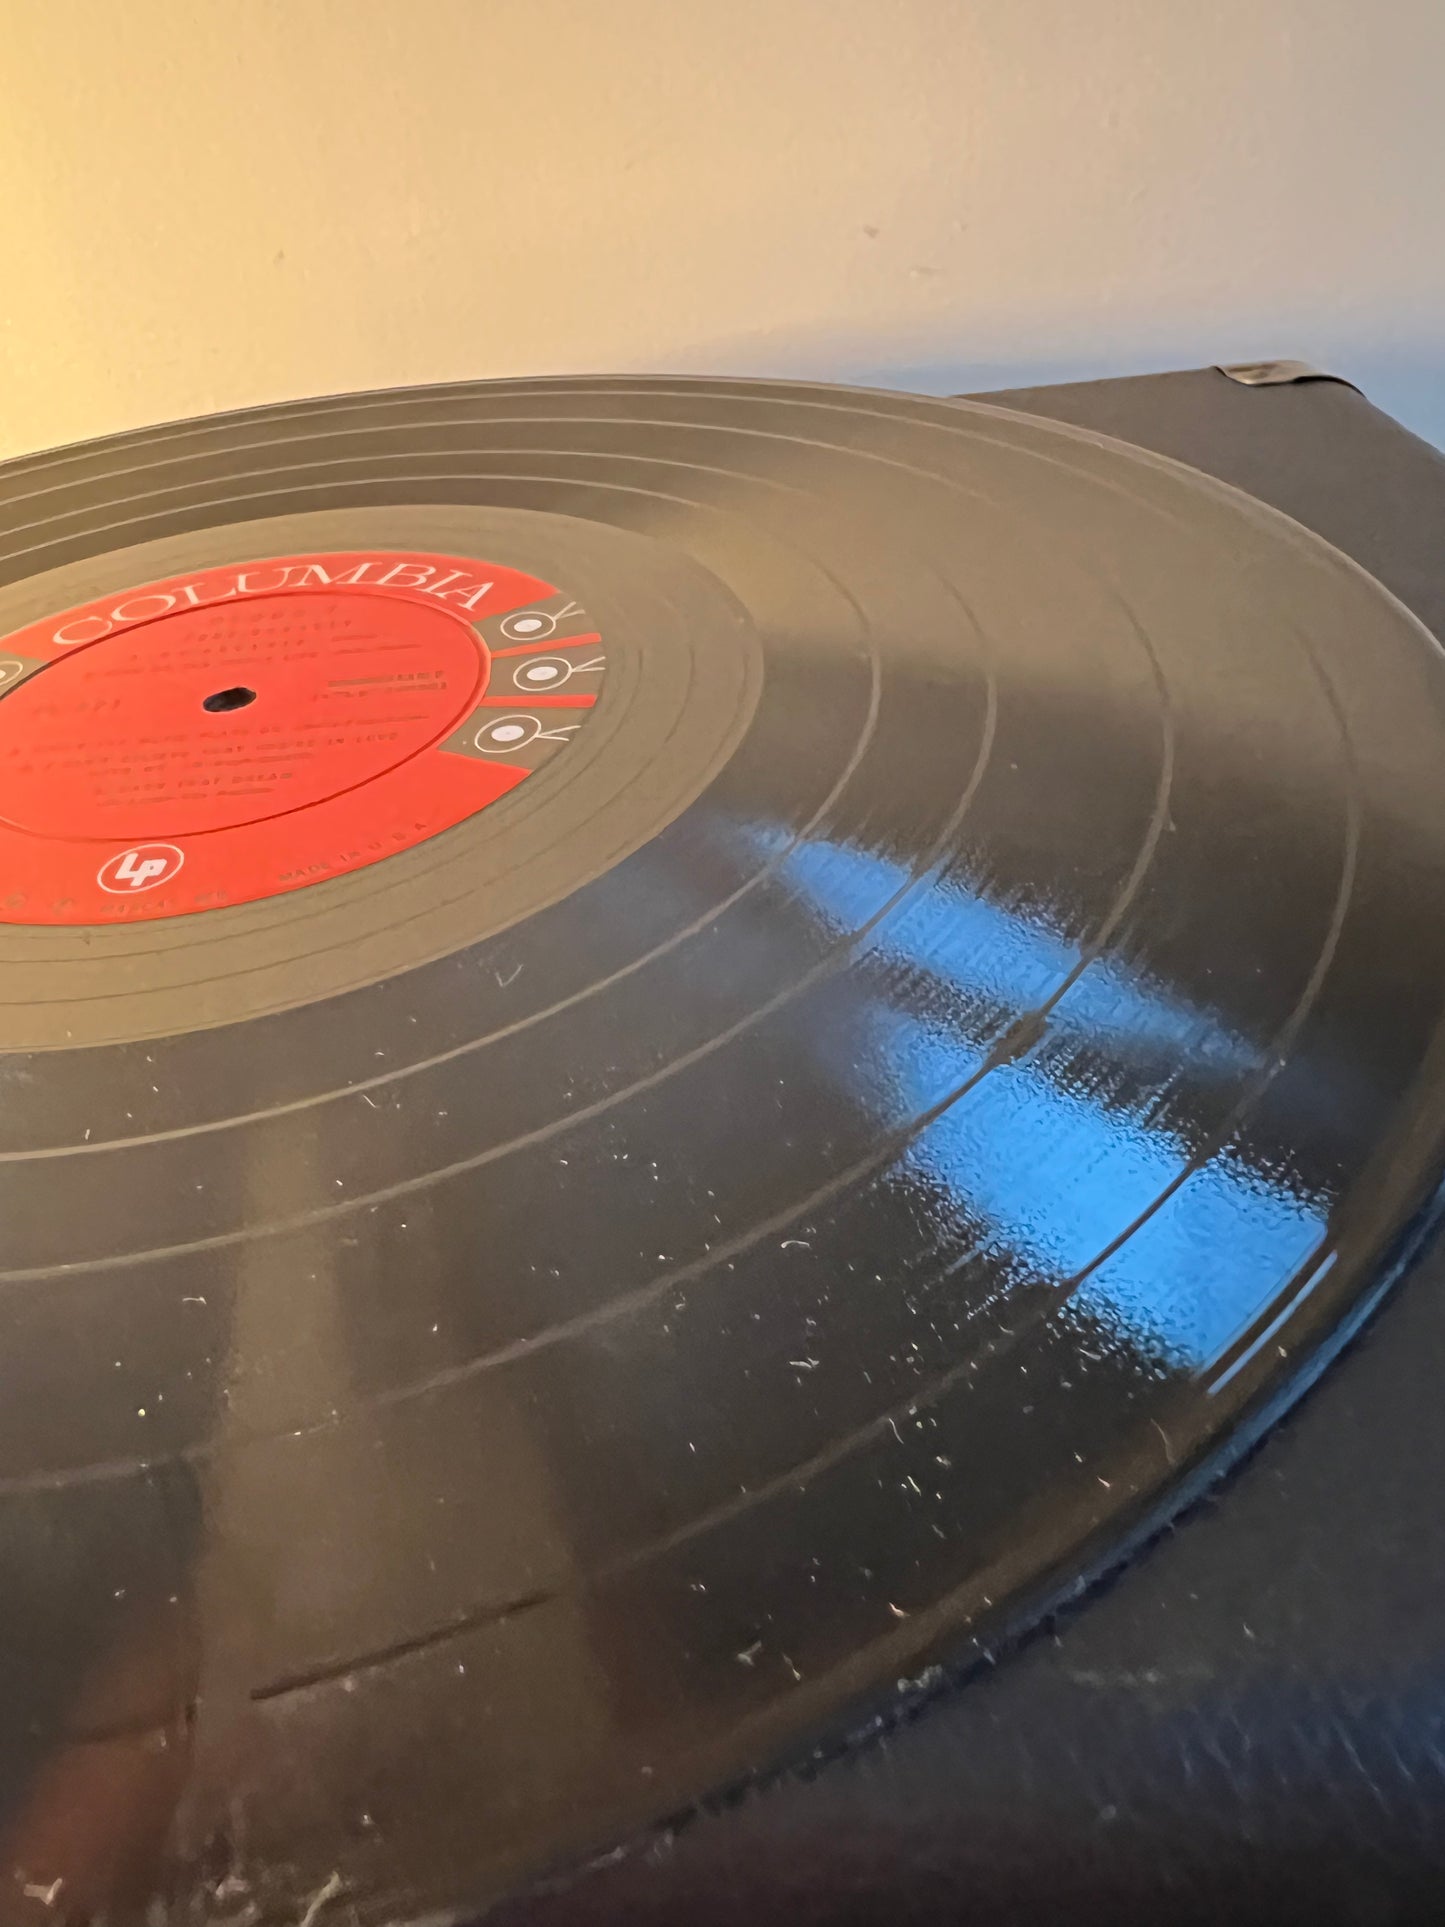 Tony Bennett Featuring Chuck Wayne 1955 Cloud 7 33 RPM Vinyl Columbia #CL 621 LP